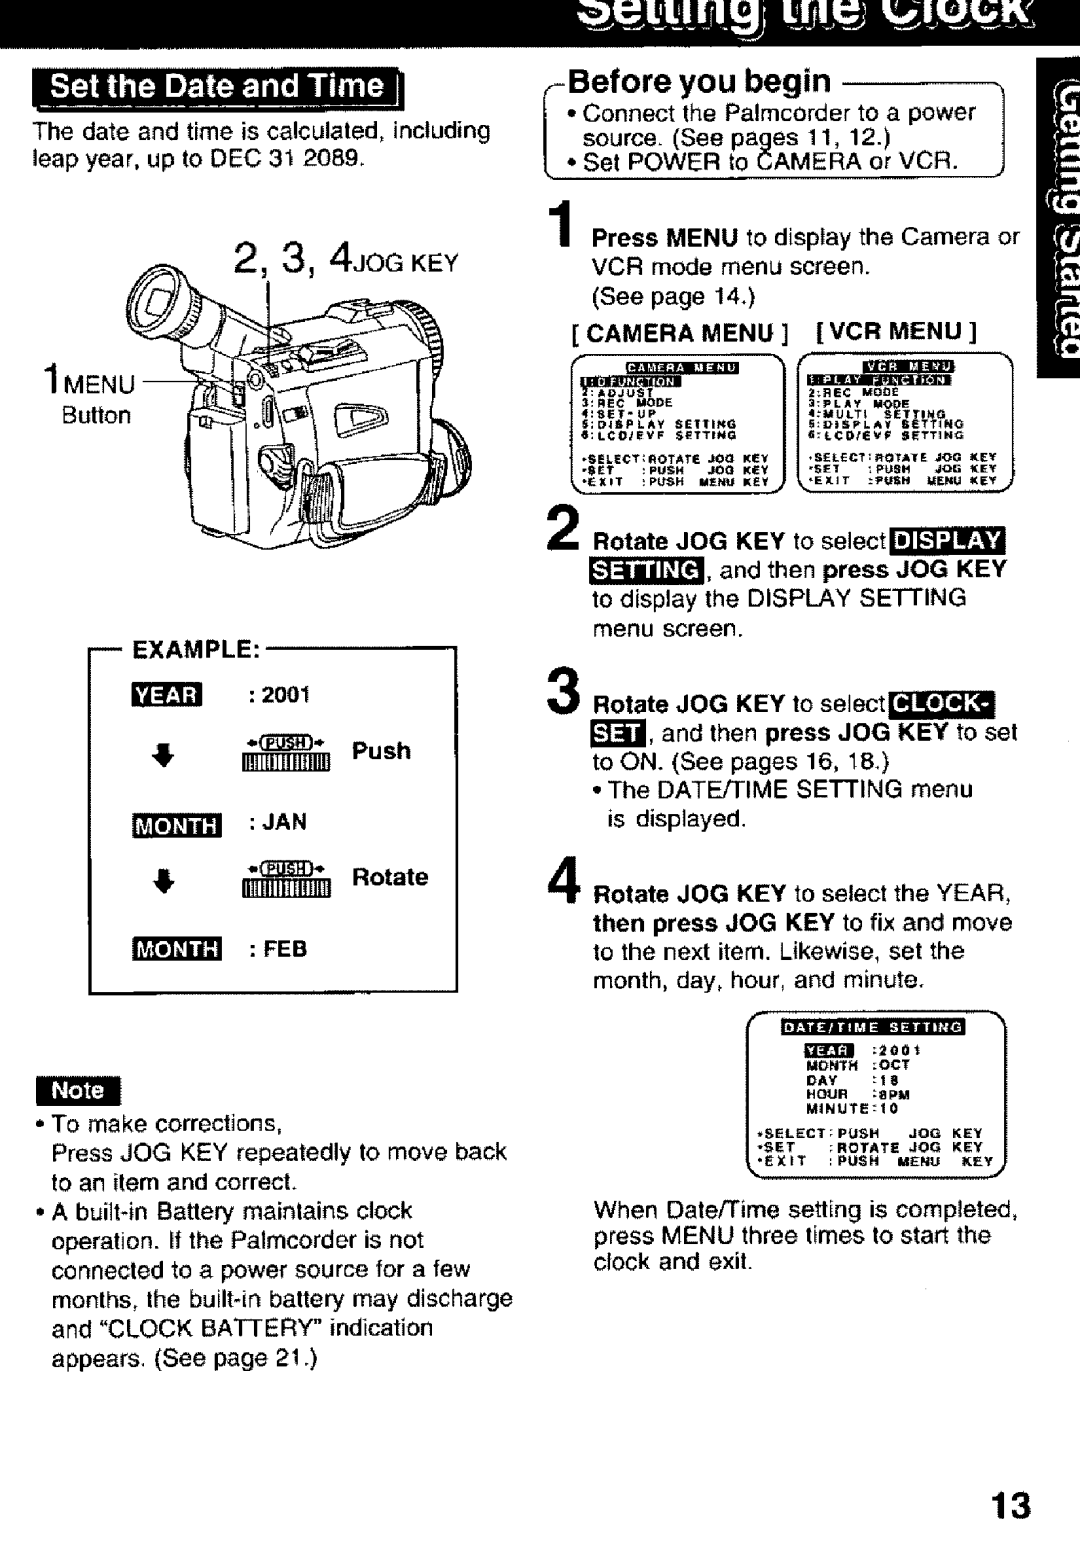 Panasonic PV-DV101 manual 2, 3, 4JOGKEY, Before, you begin 